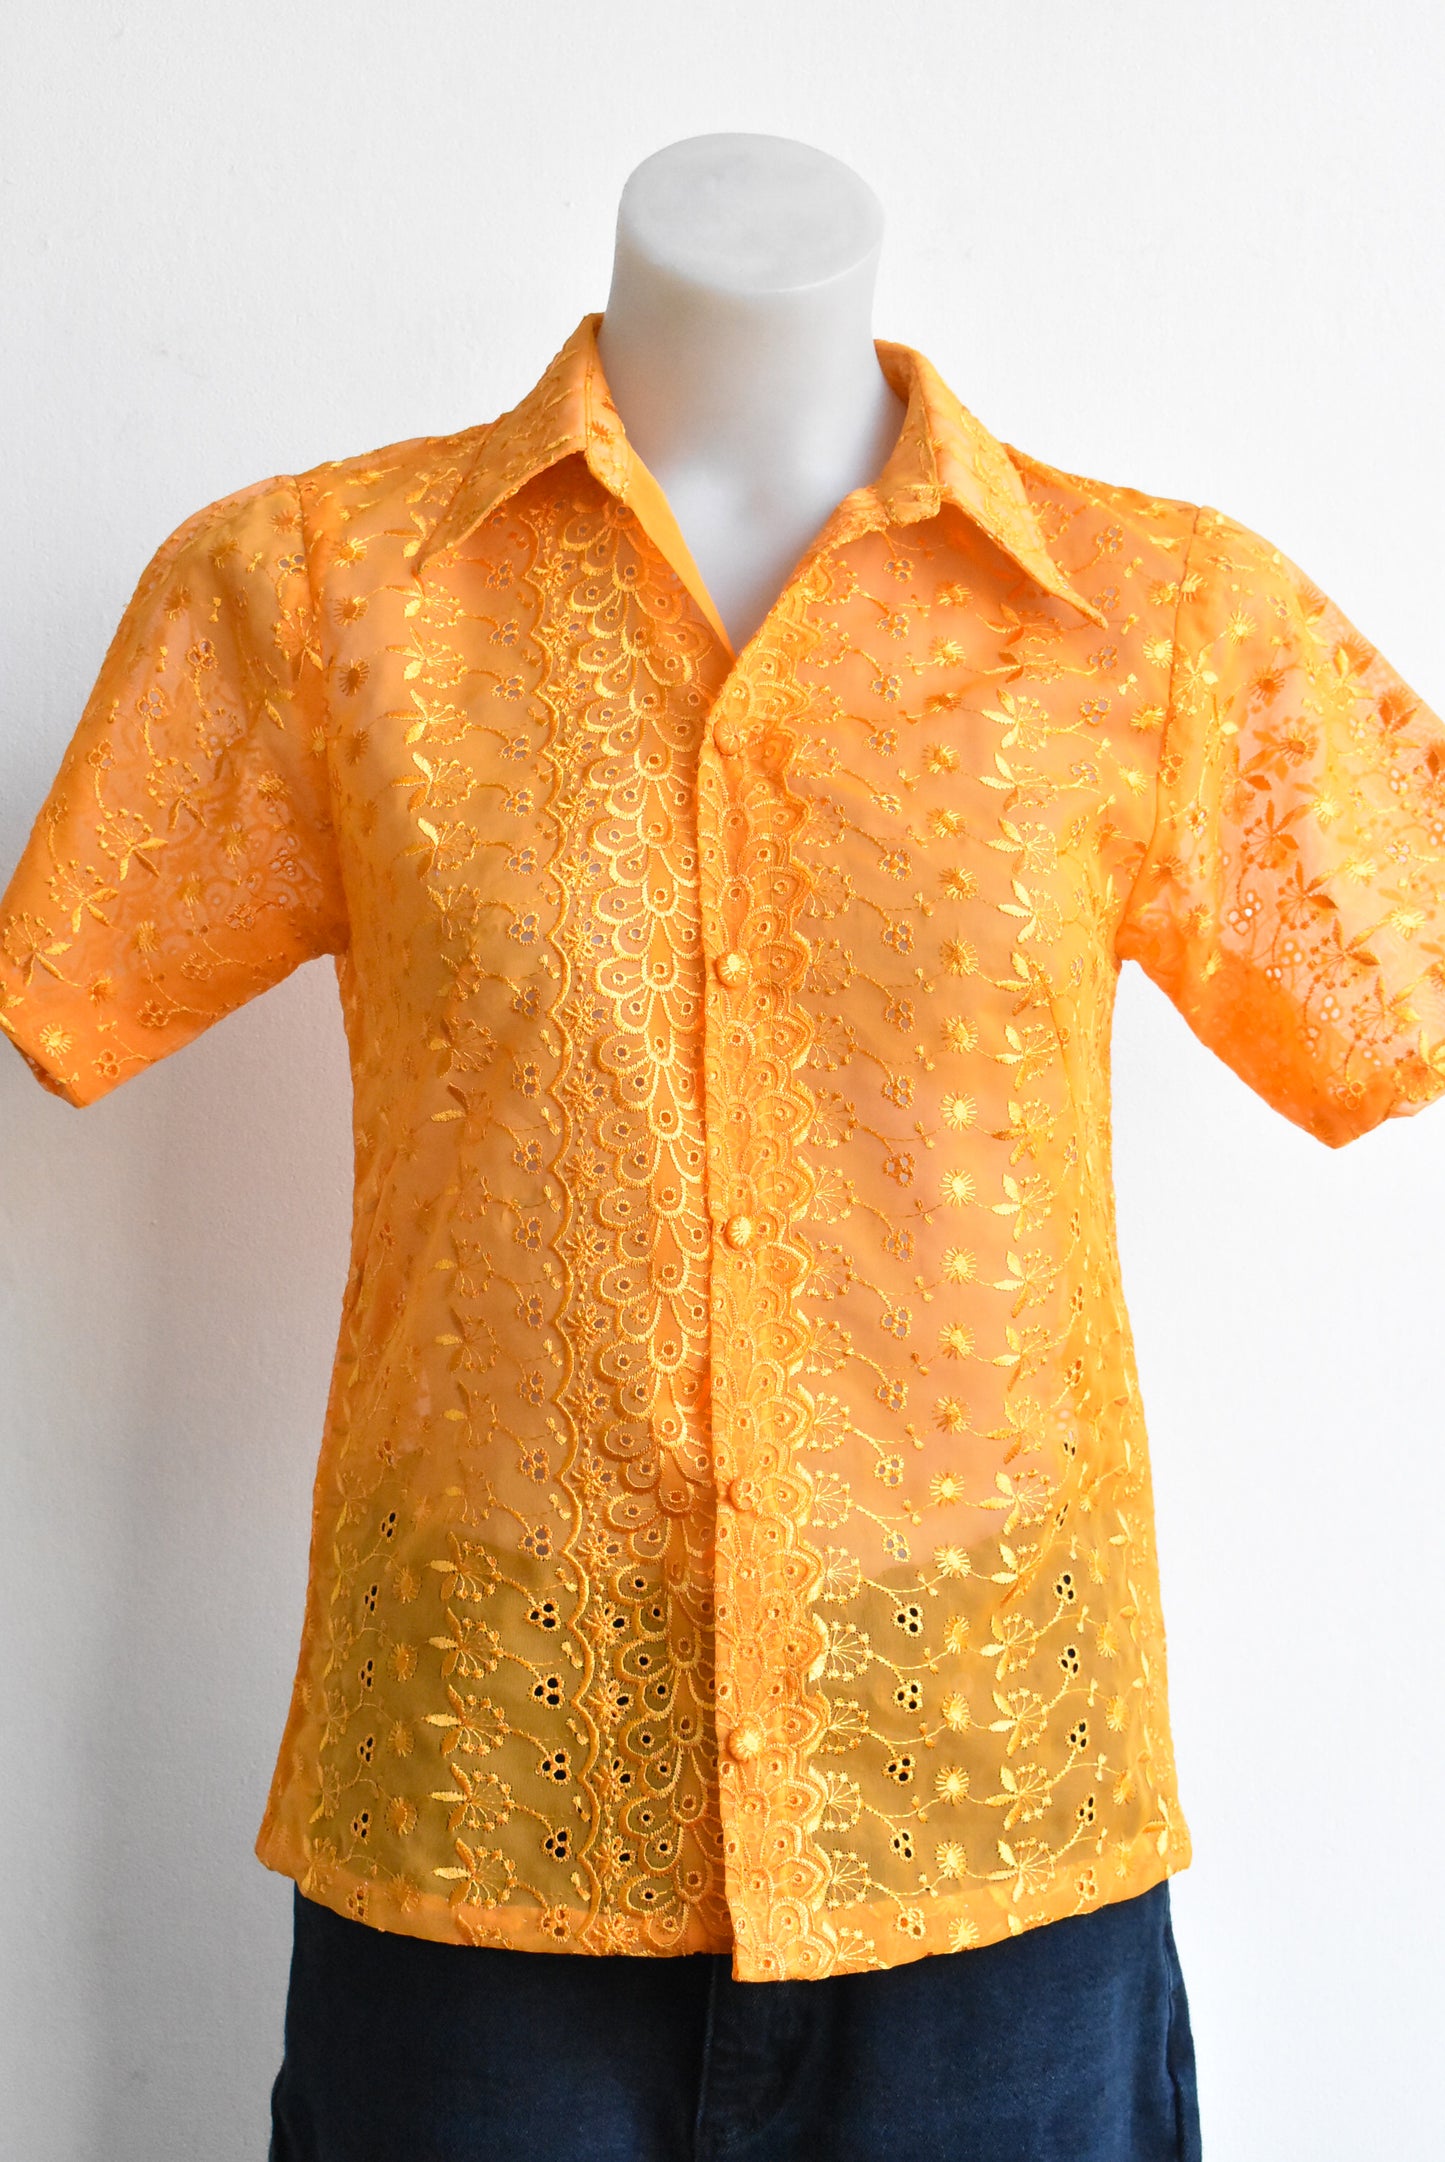 Handmade orange button-up shirt, XS